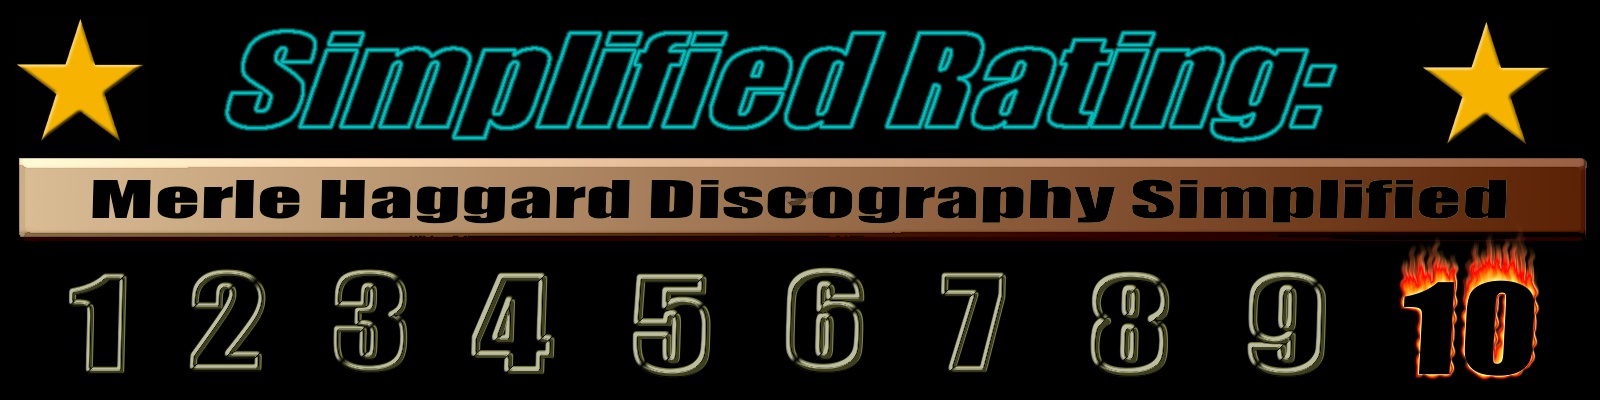 Merle Haggard Discography Simplified Rating Criteria